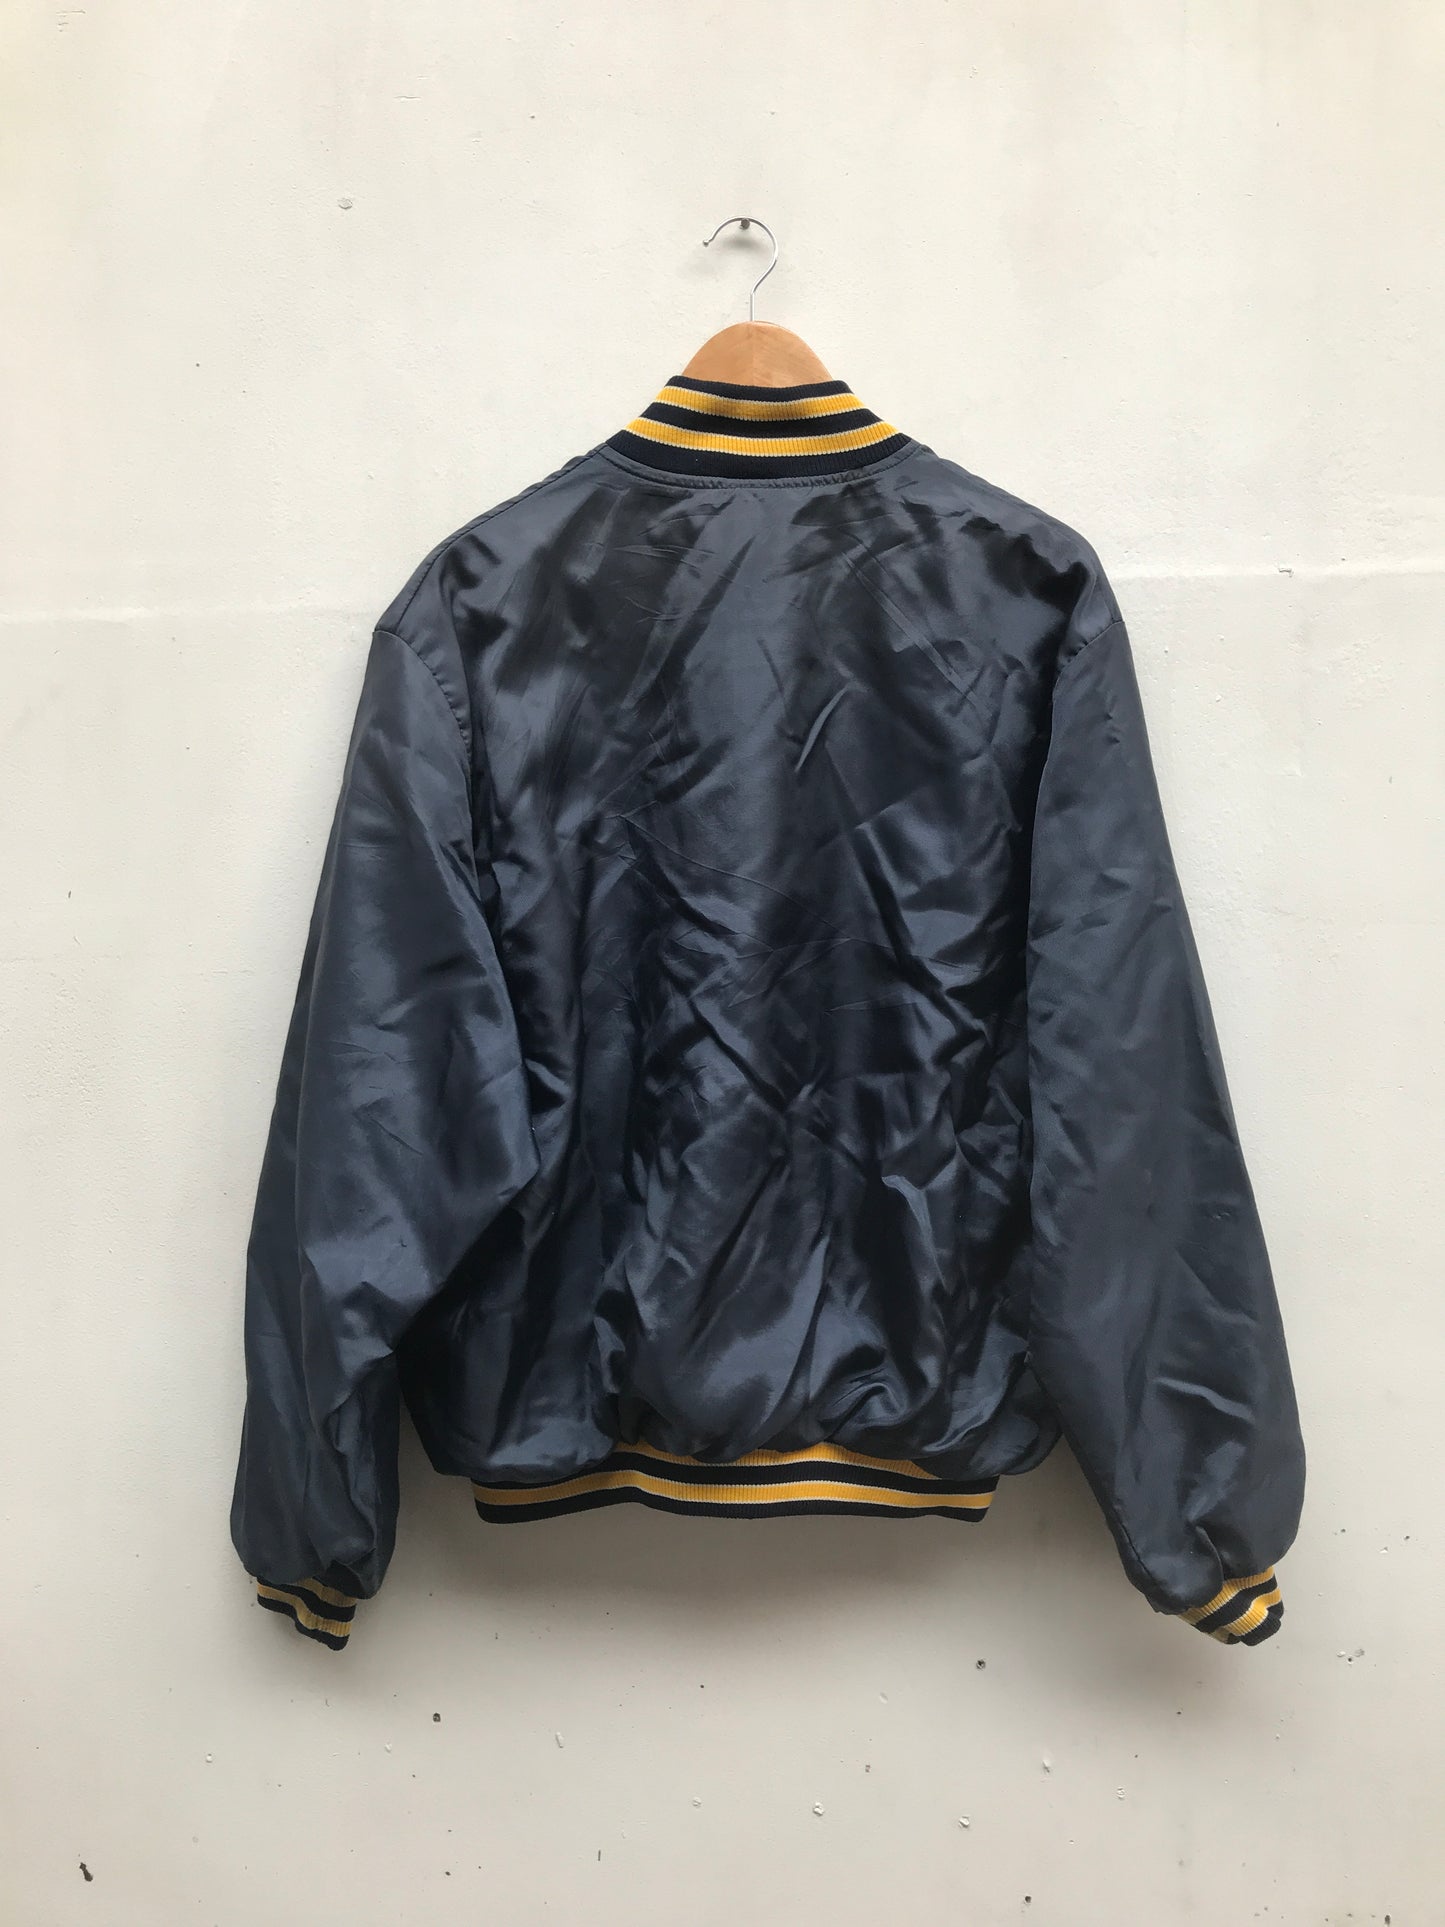 Vintage Gina jacket